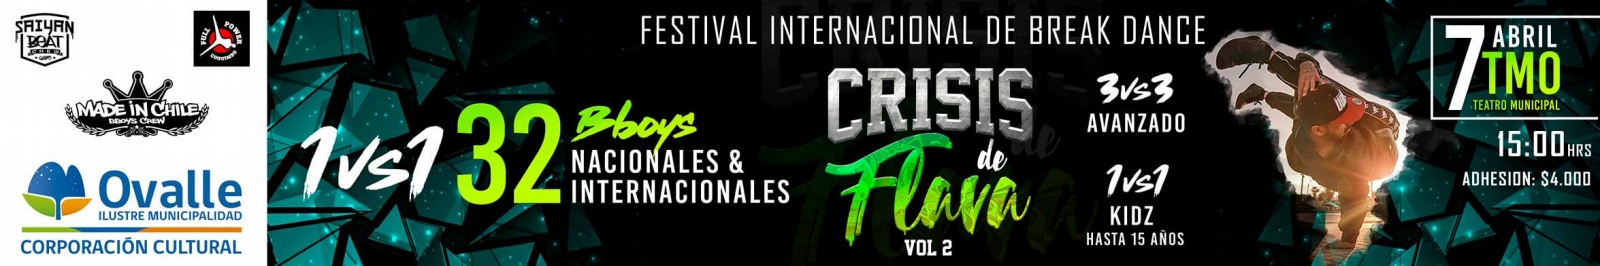 Festival Internacional De Breakin Crisis De Flava 3 poster